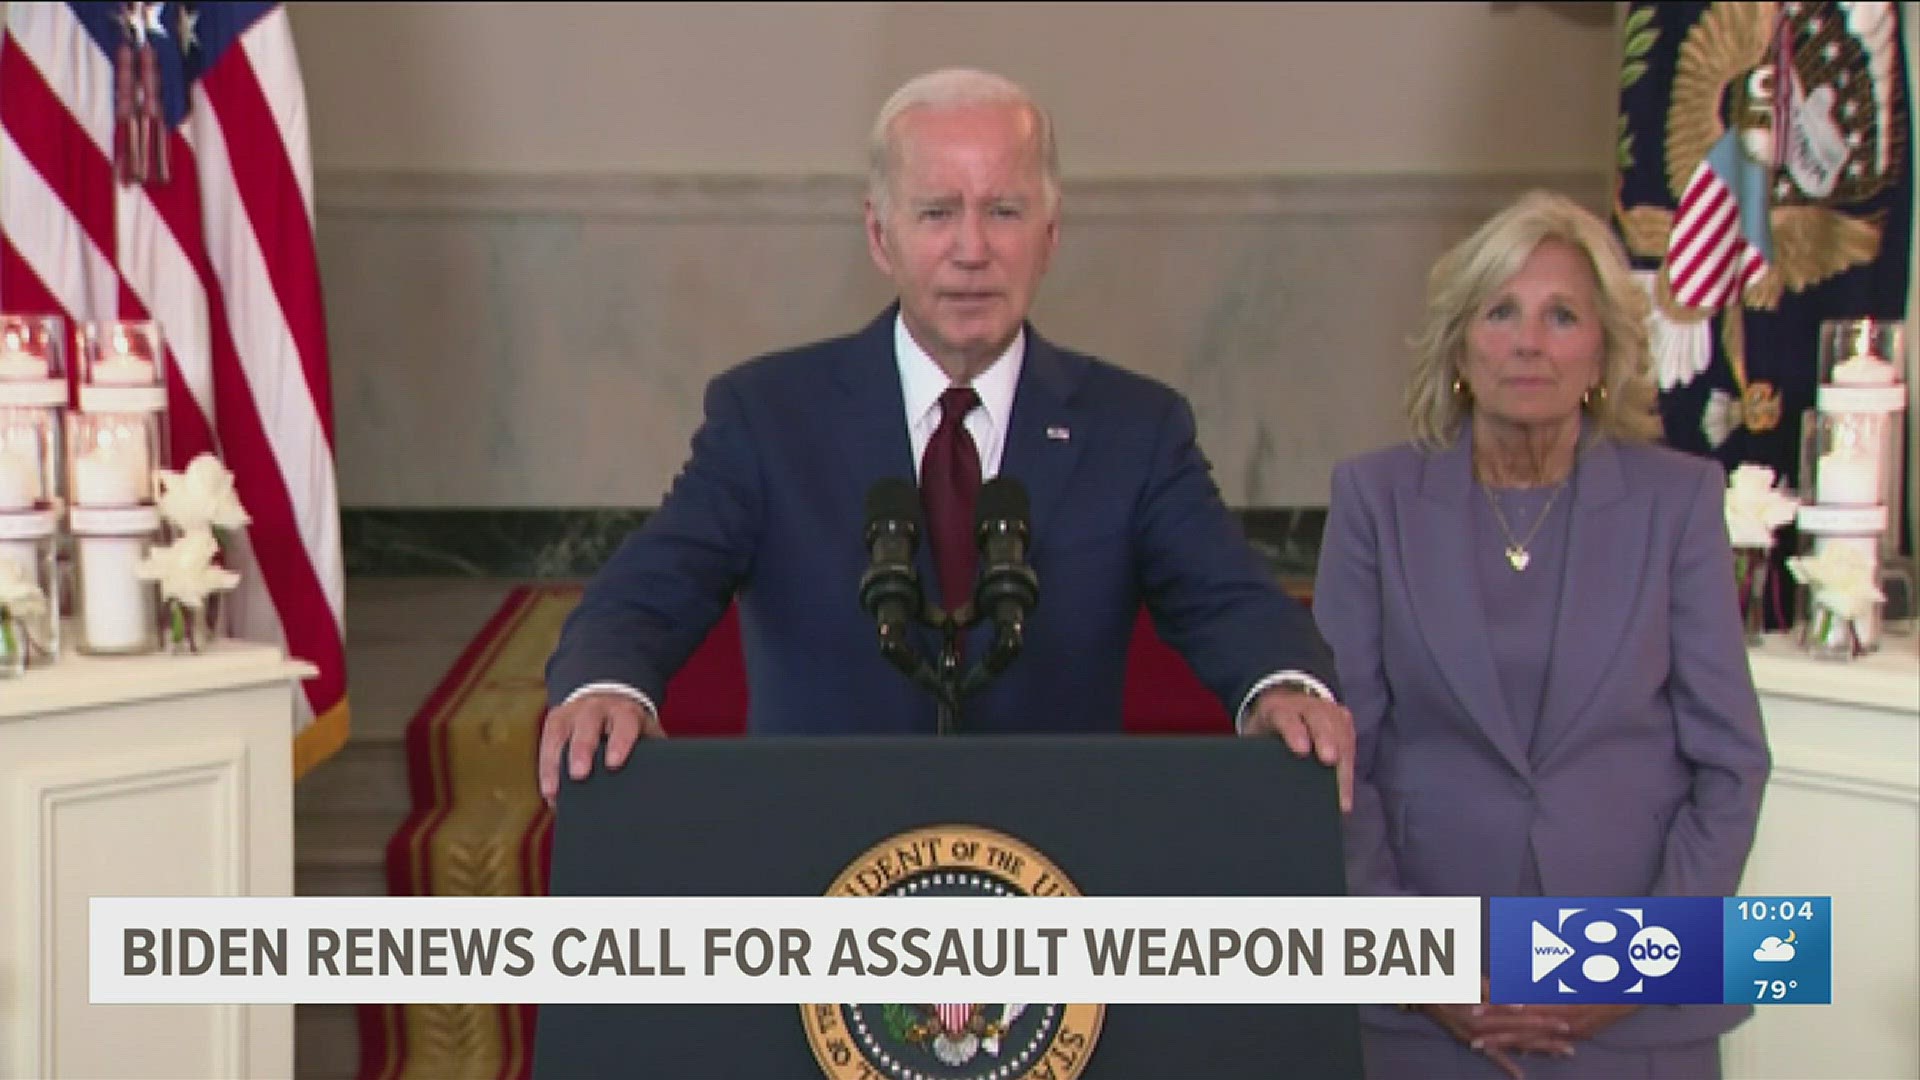 President Joe Biden, again, is calling for a ban on assault weapons.